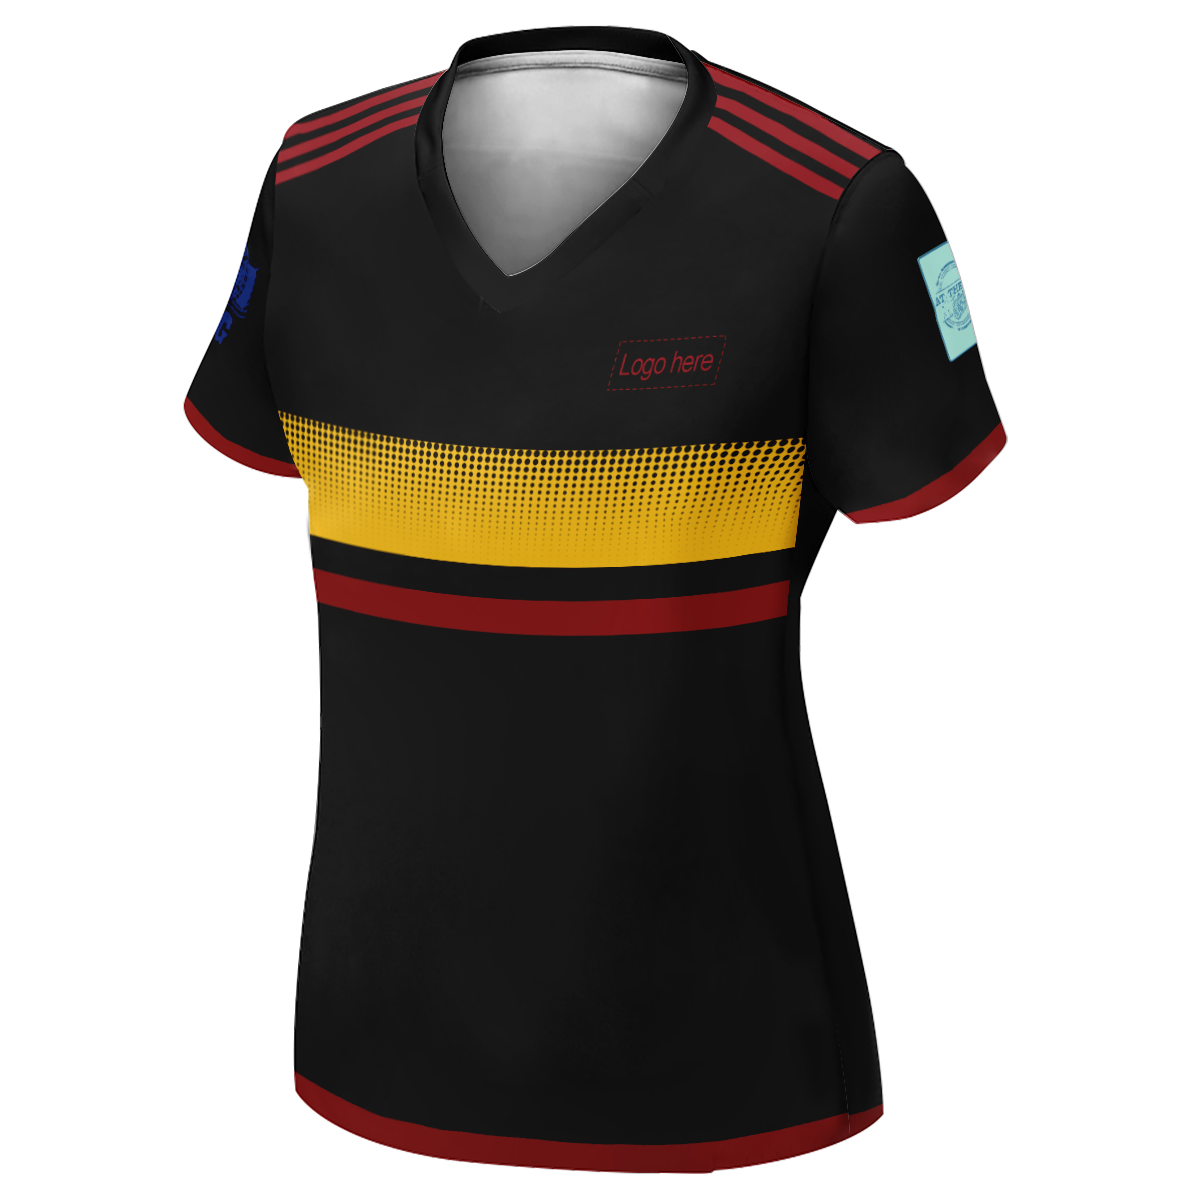 Camisa de futebol feminina autêntica da Copa do Mundo da Colômbia personalizada com logotipo